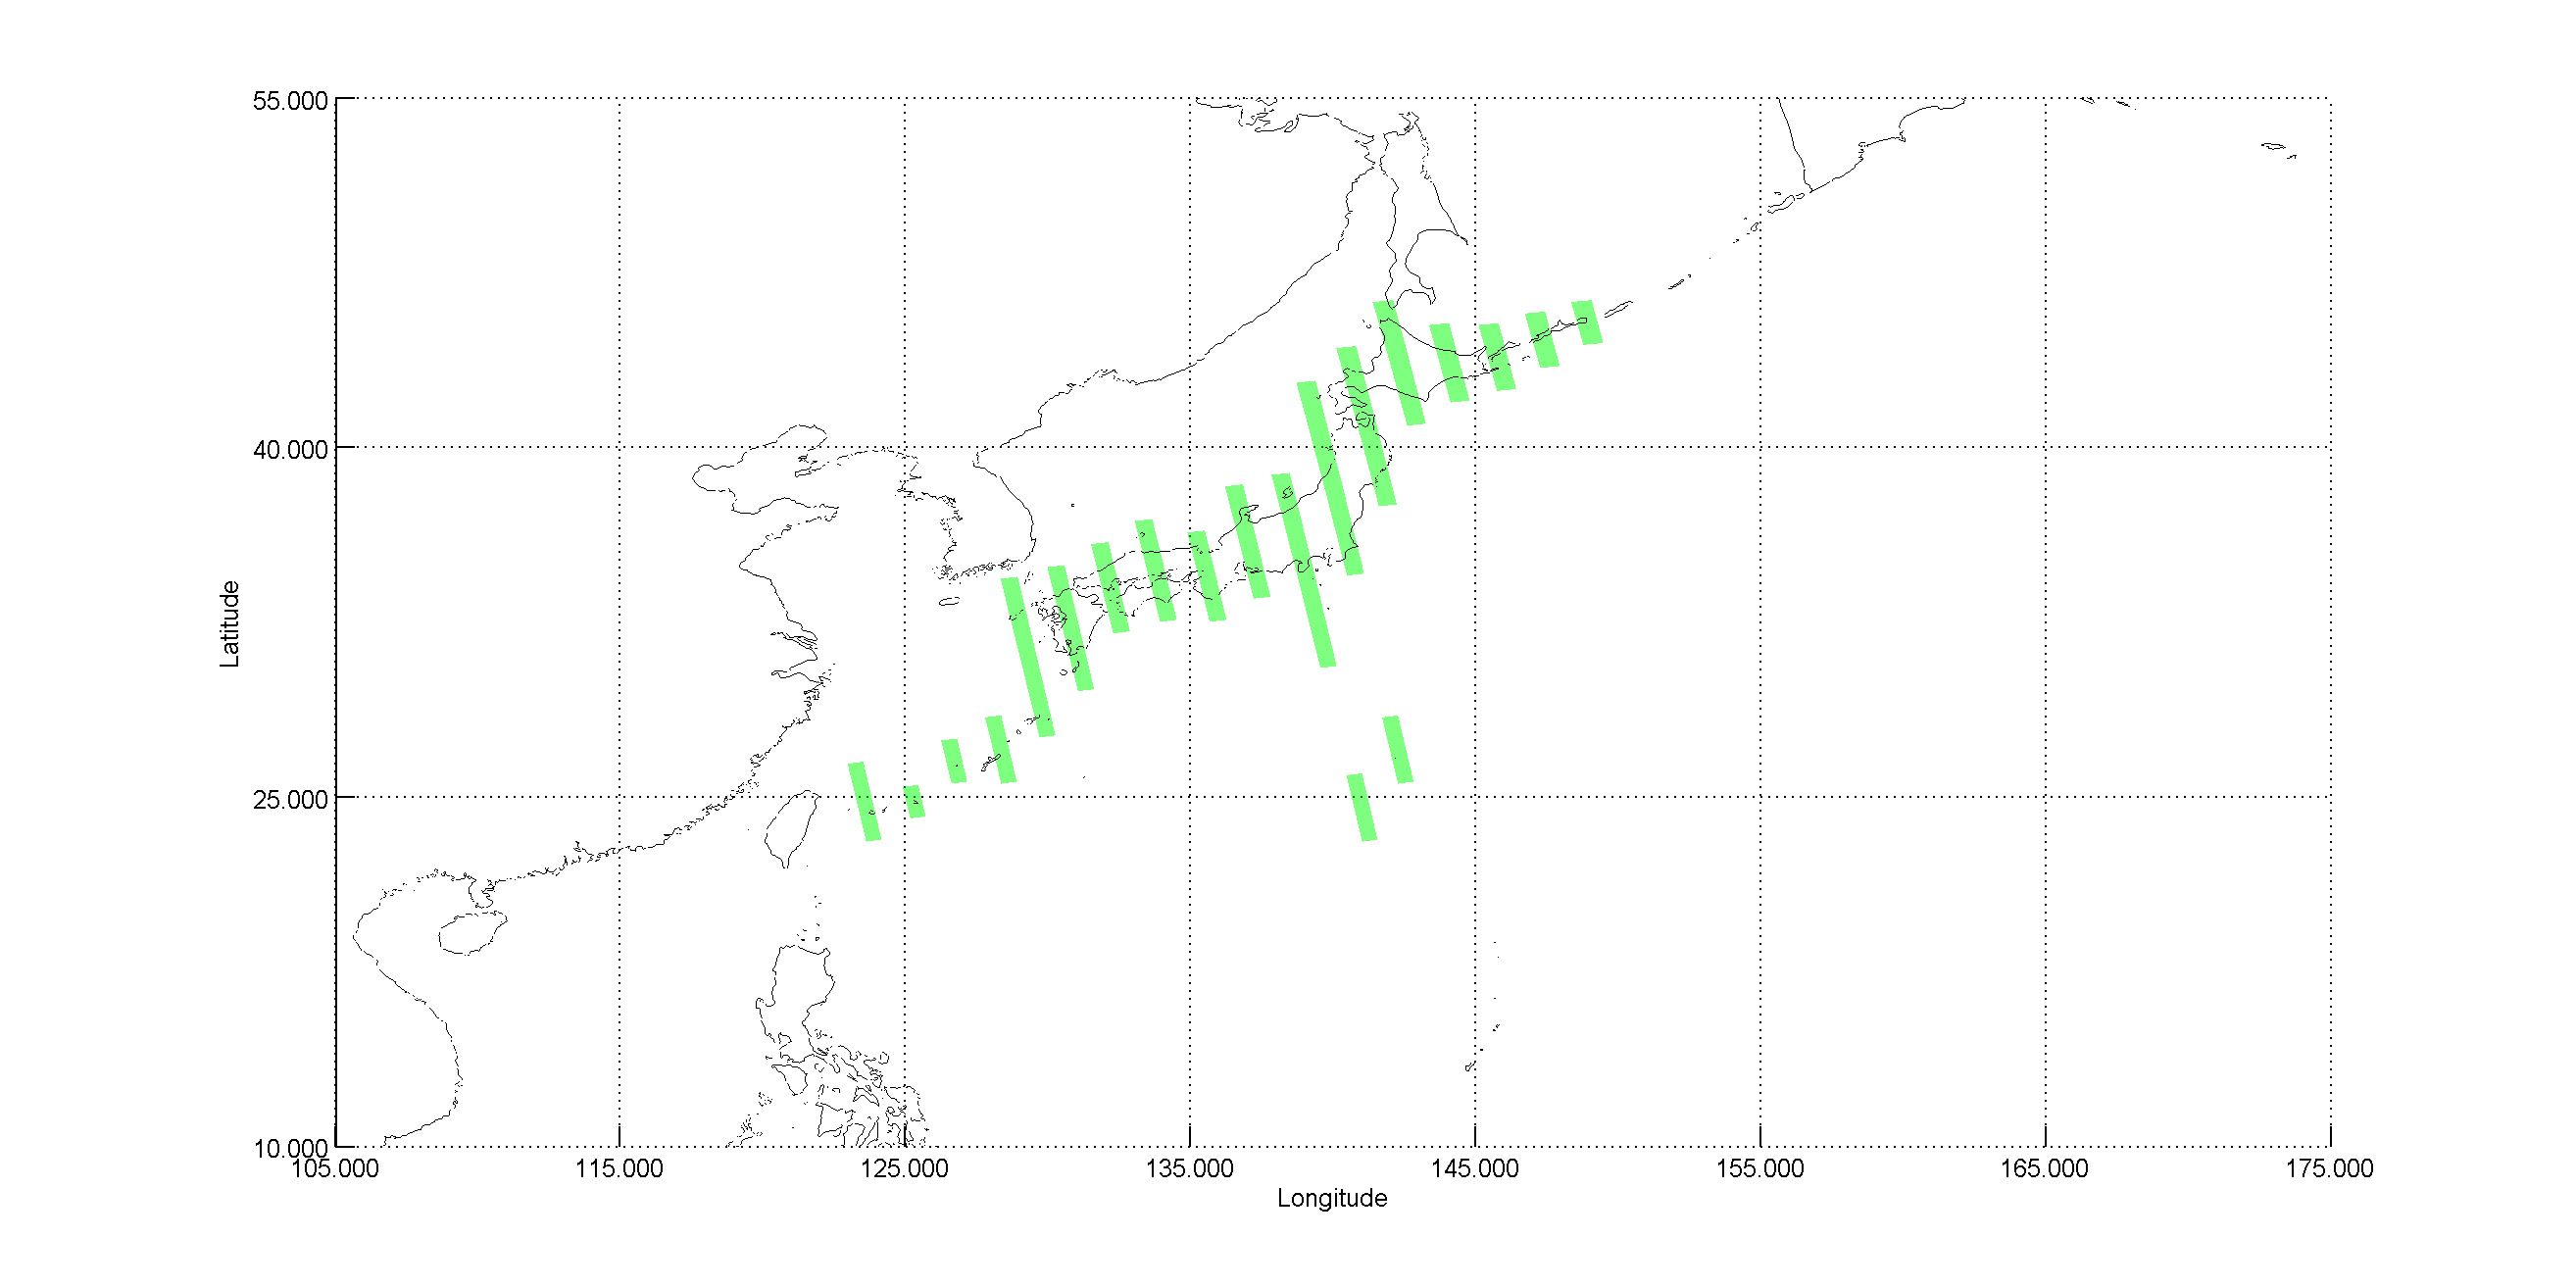 CYCLE_155 - Japan Ascending passes